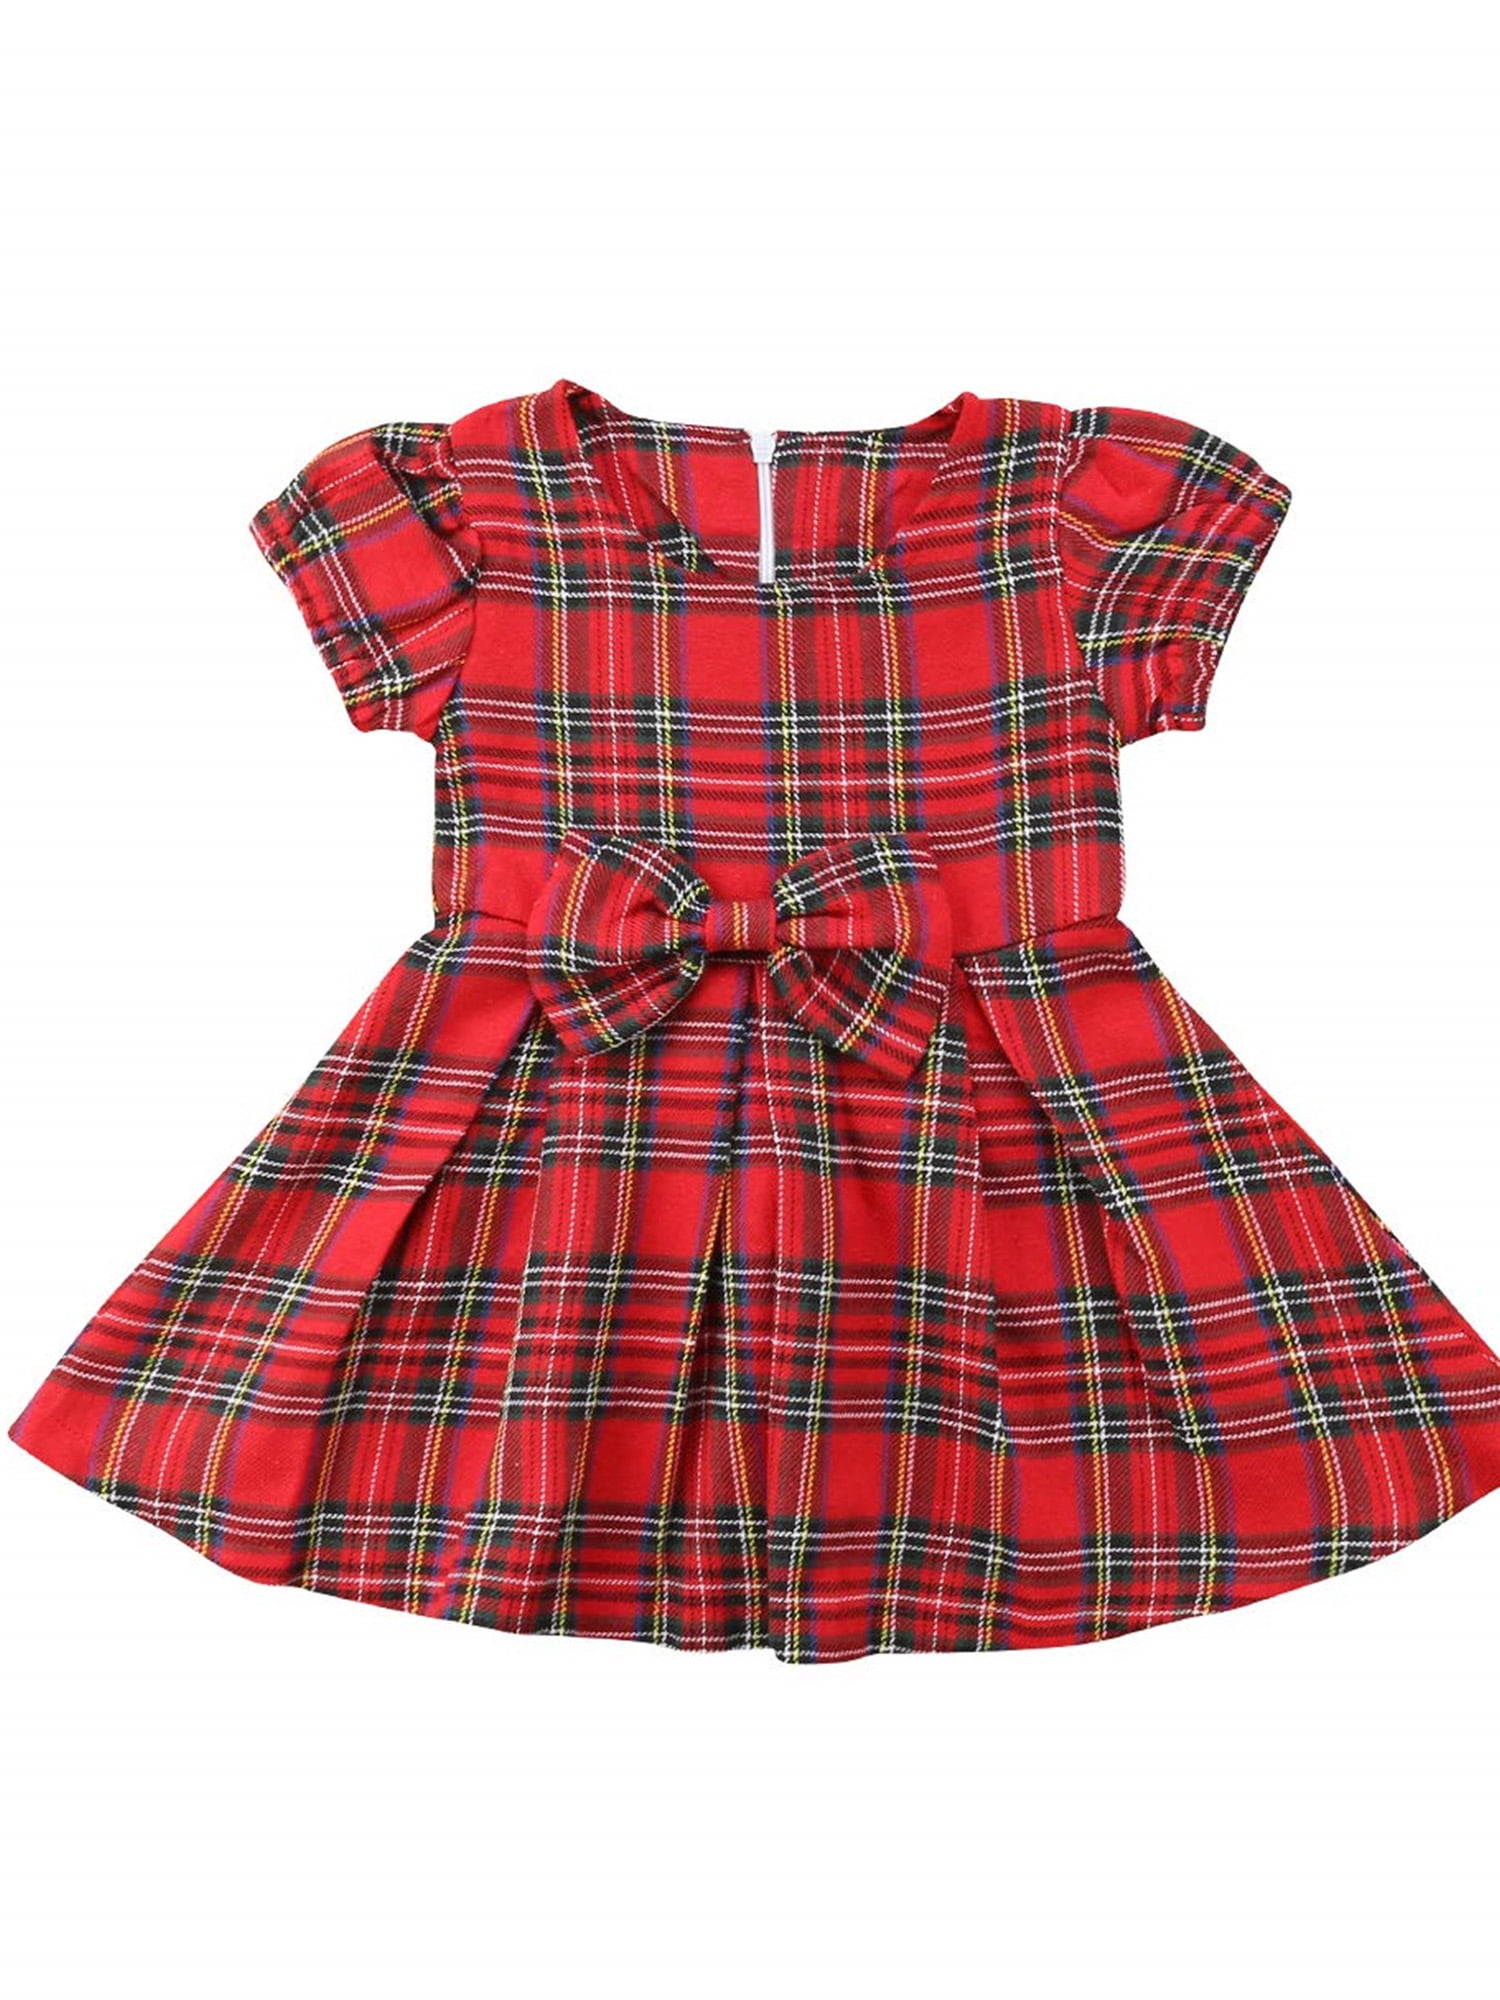 red plaid baby dress